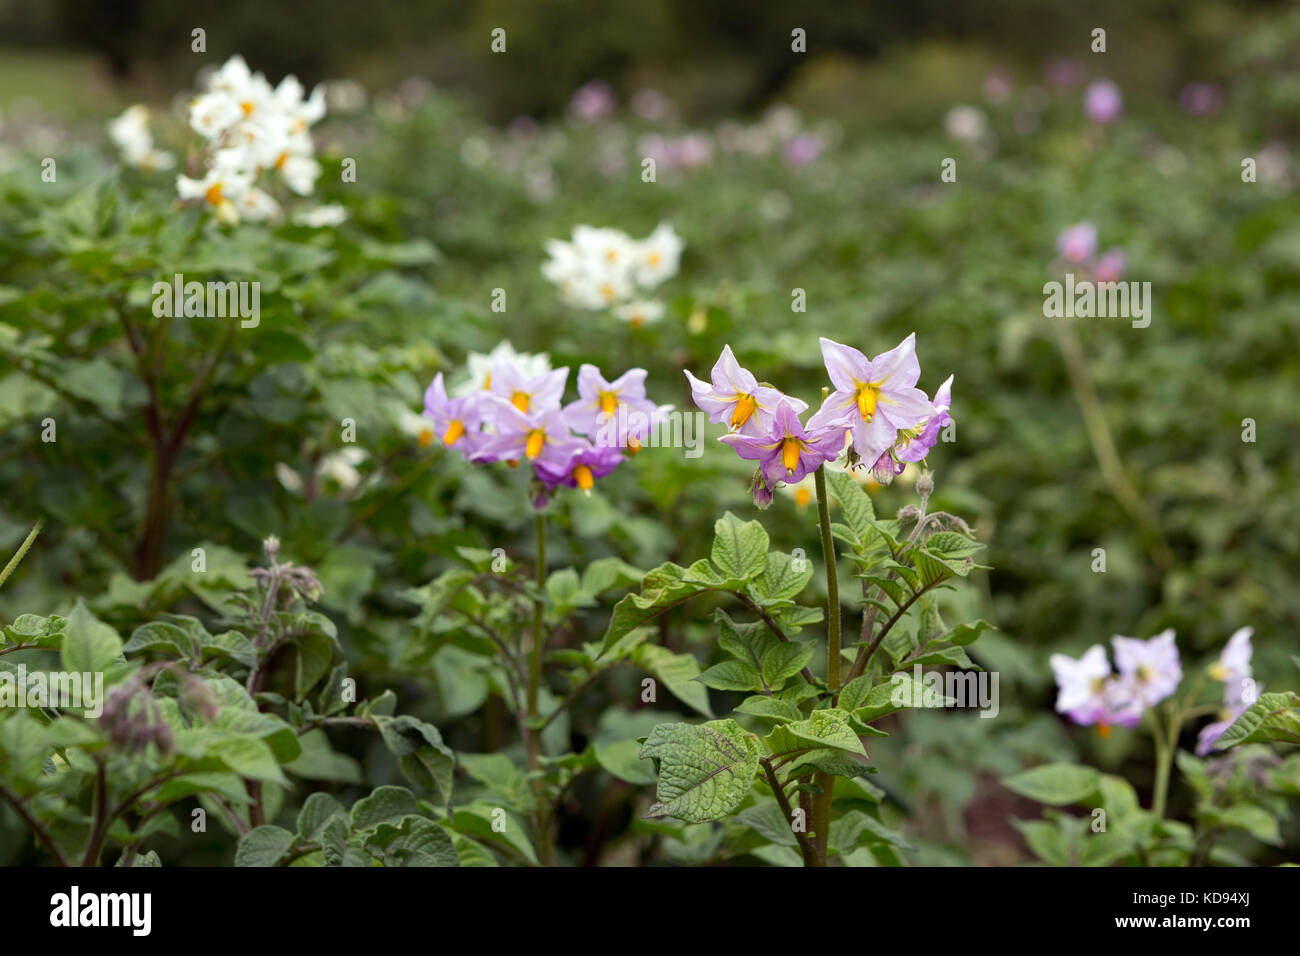 Flowers of the Potato plant - Solanum tuberosum. Stock Photo